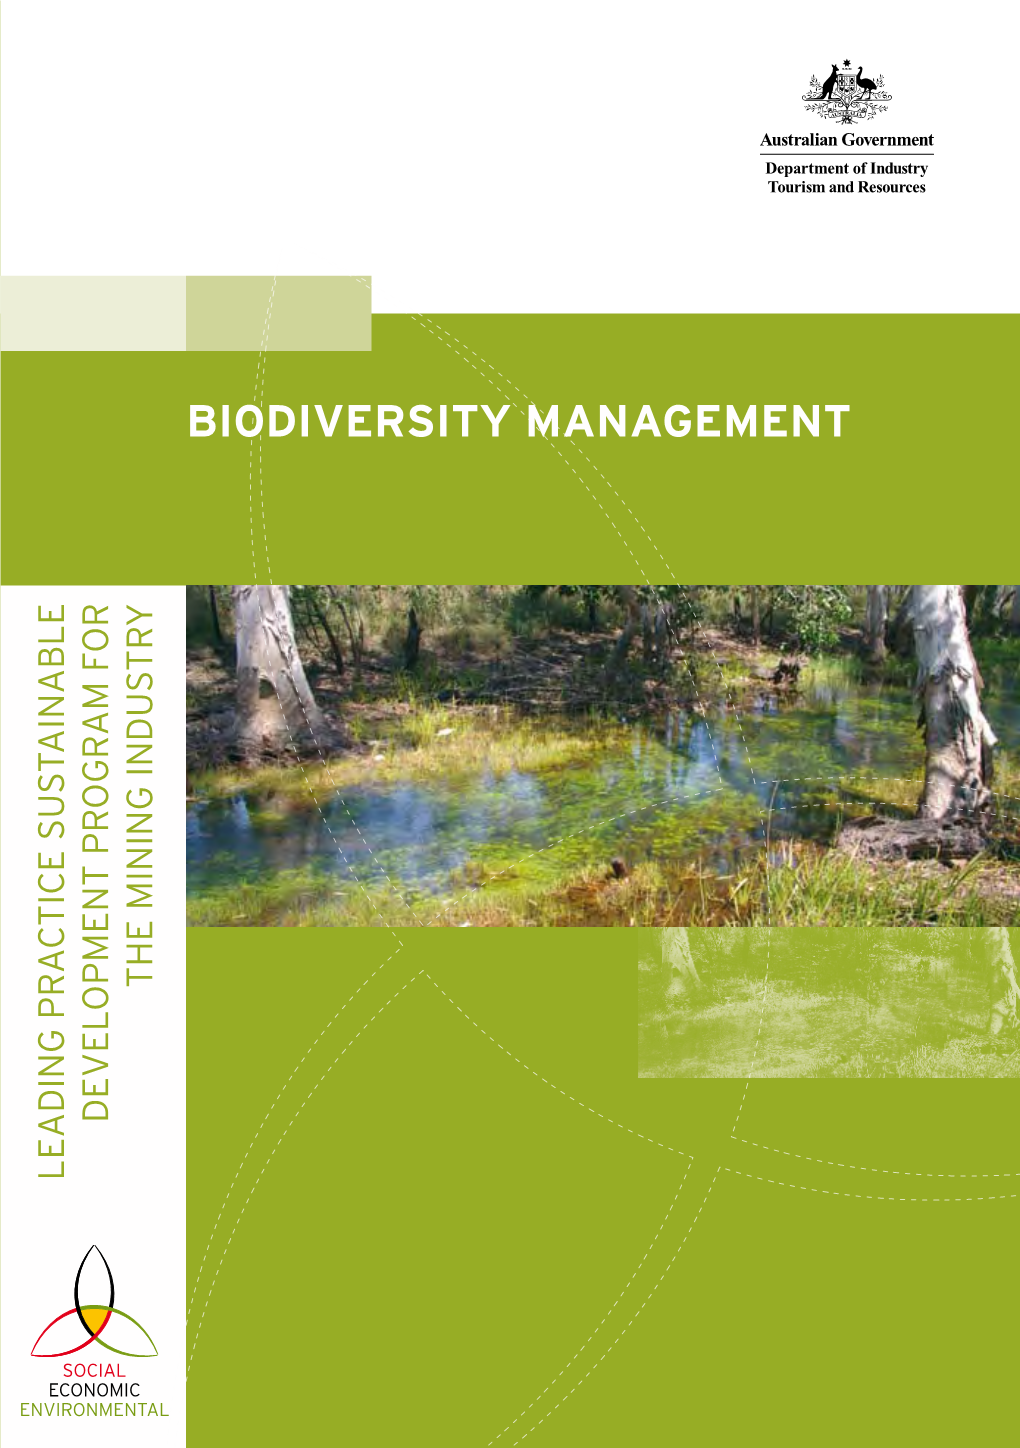 Biodiversity Management 8 2.5 Key Biodiversity Threats and Opportunities 9